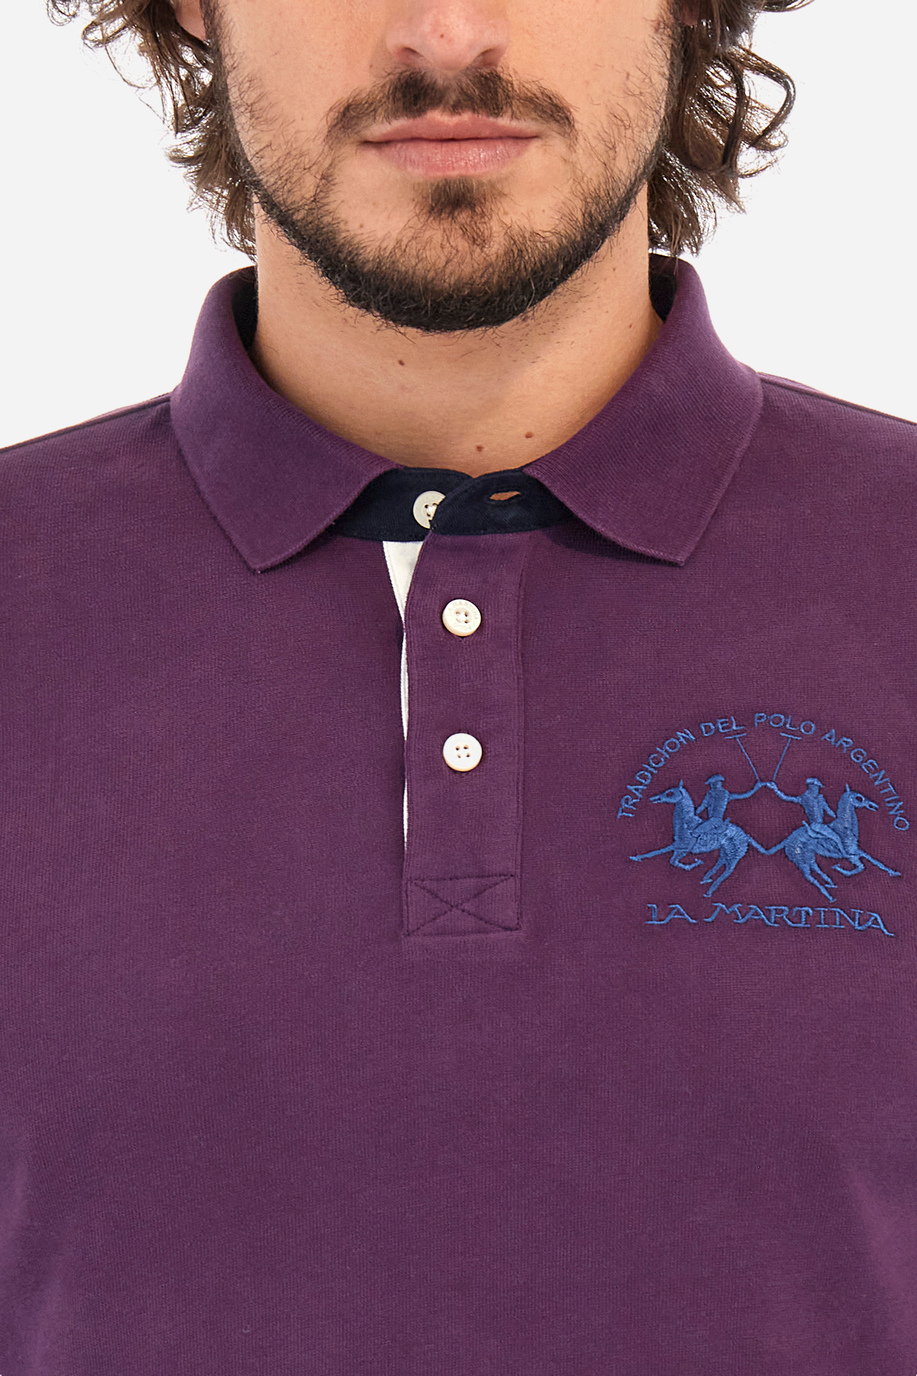 Polo homme coupe classique - Wilfredo - Regular fit | La Martina - Official Online Shop